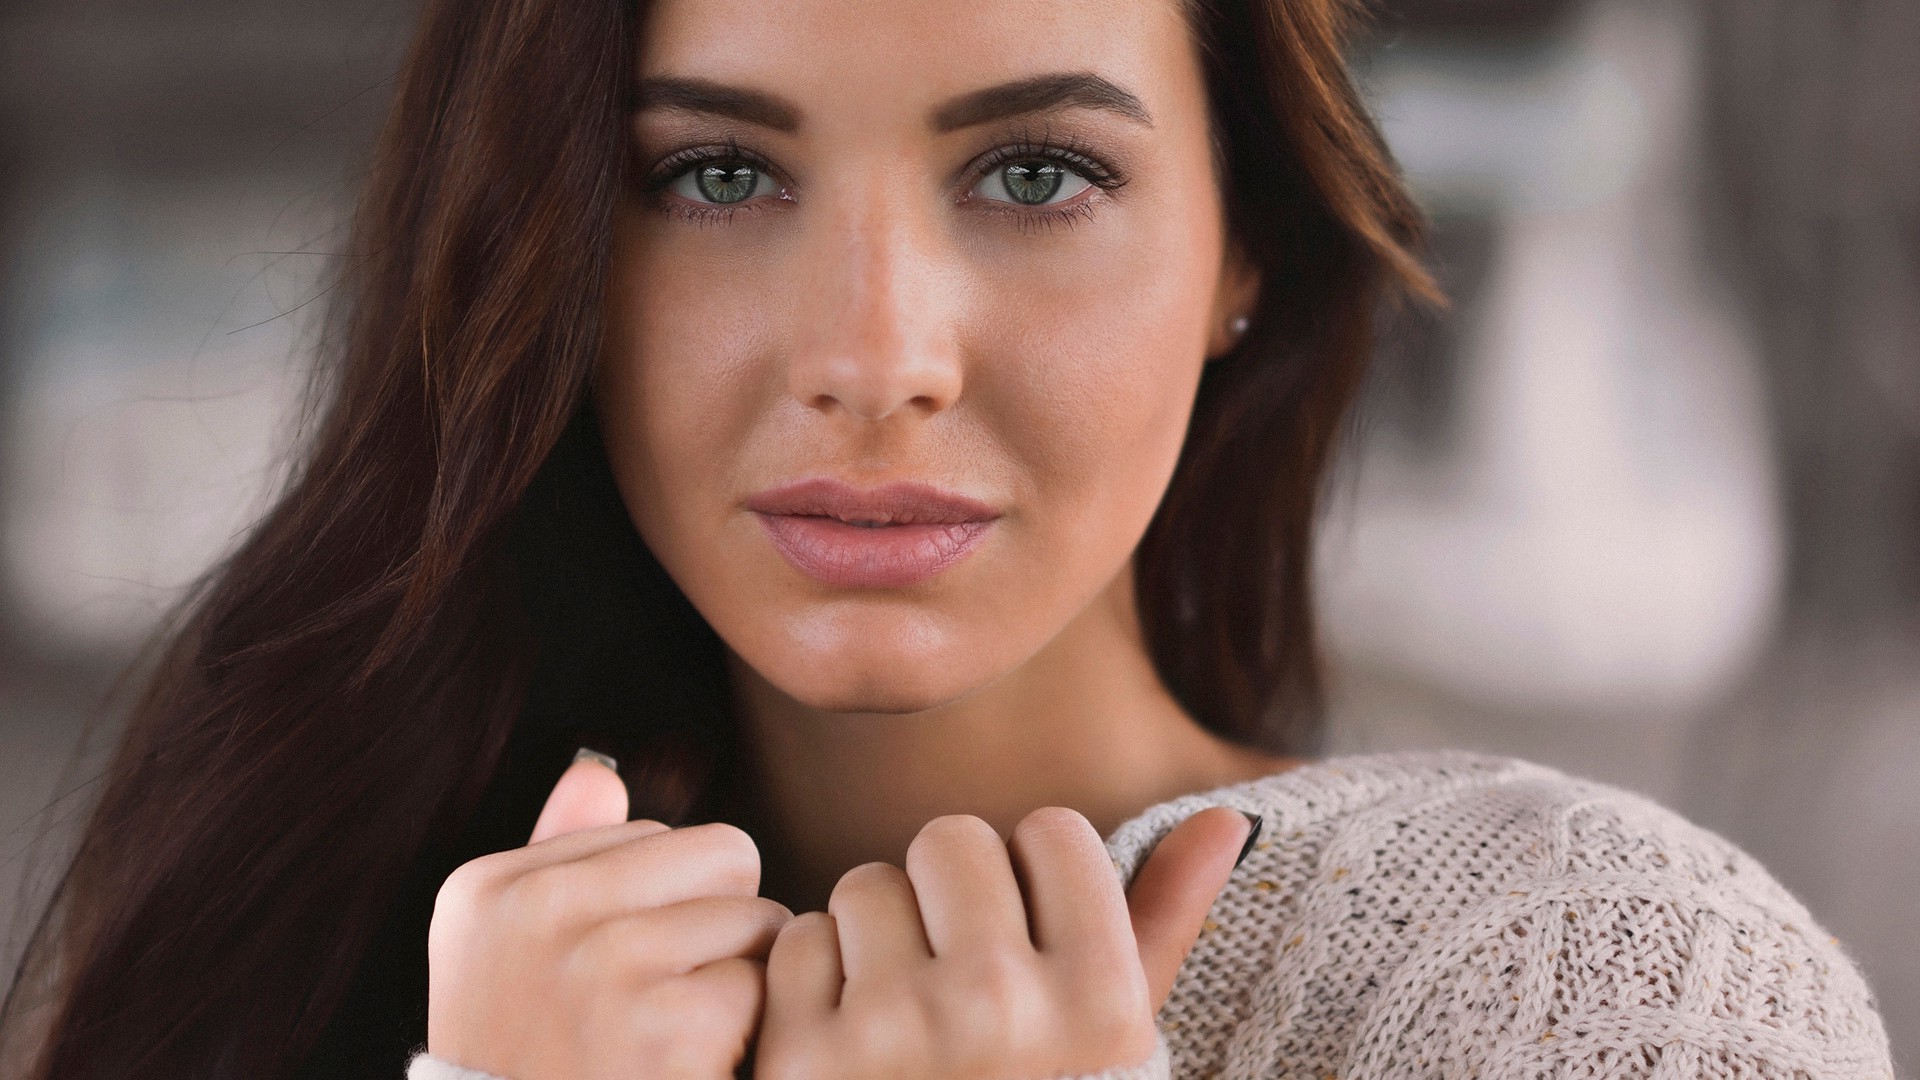 brunettes women models metart magazine outdoors brown eyes 